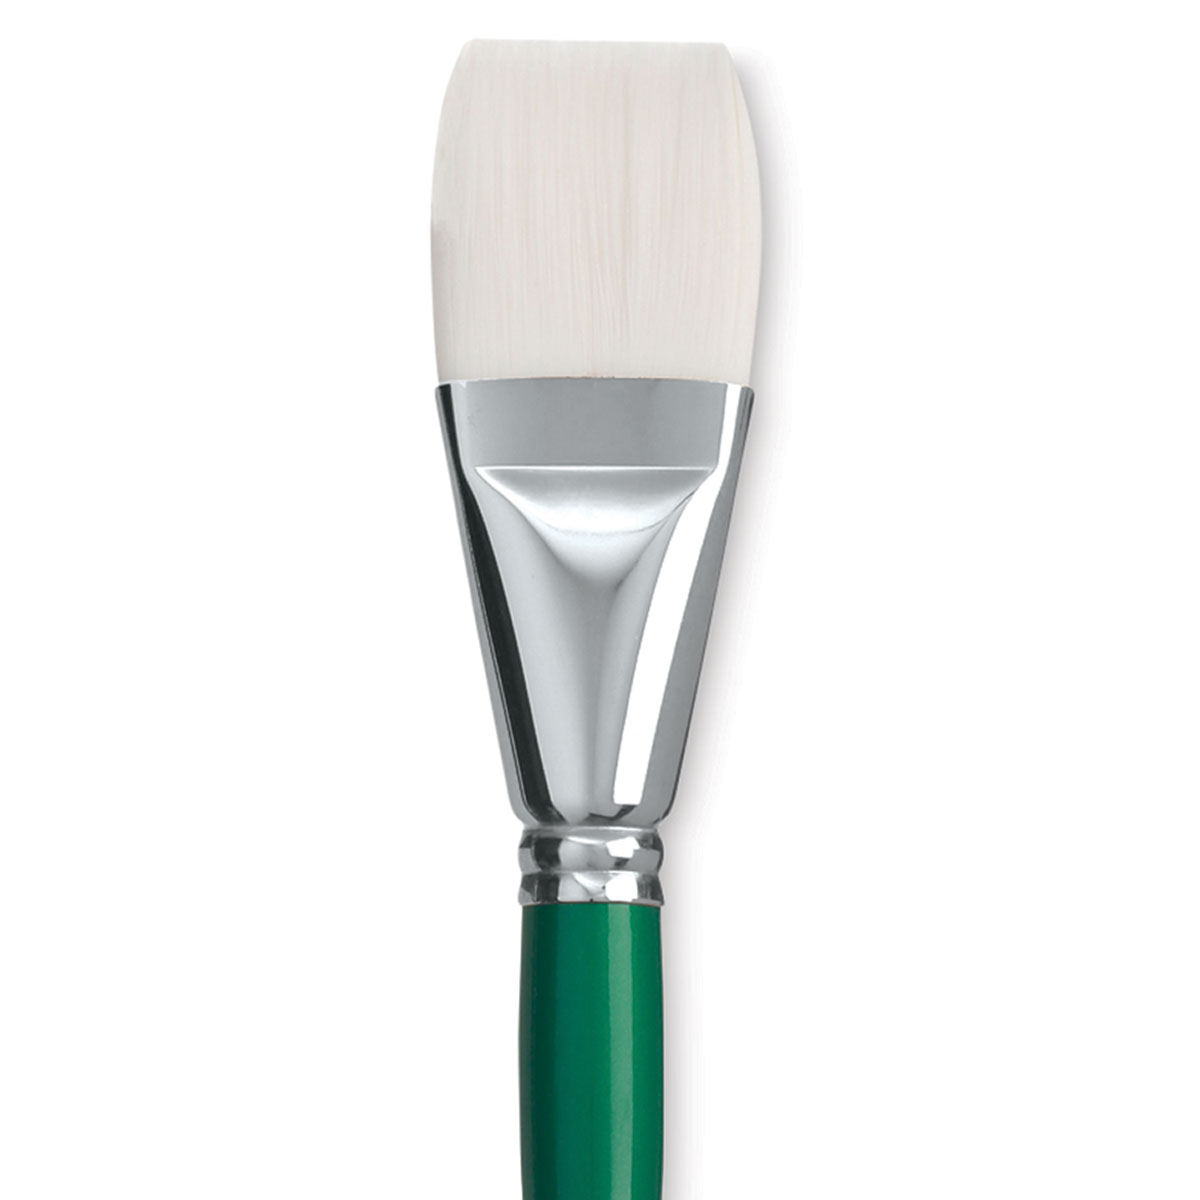 Princeton Art & Brush Co Umbria 6200F Flat Synthetic Paint Brush Long Handle